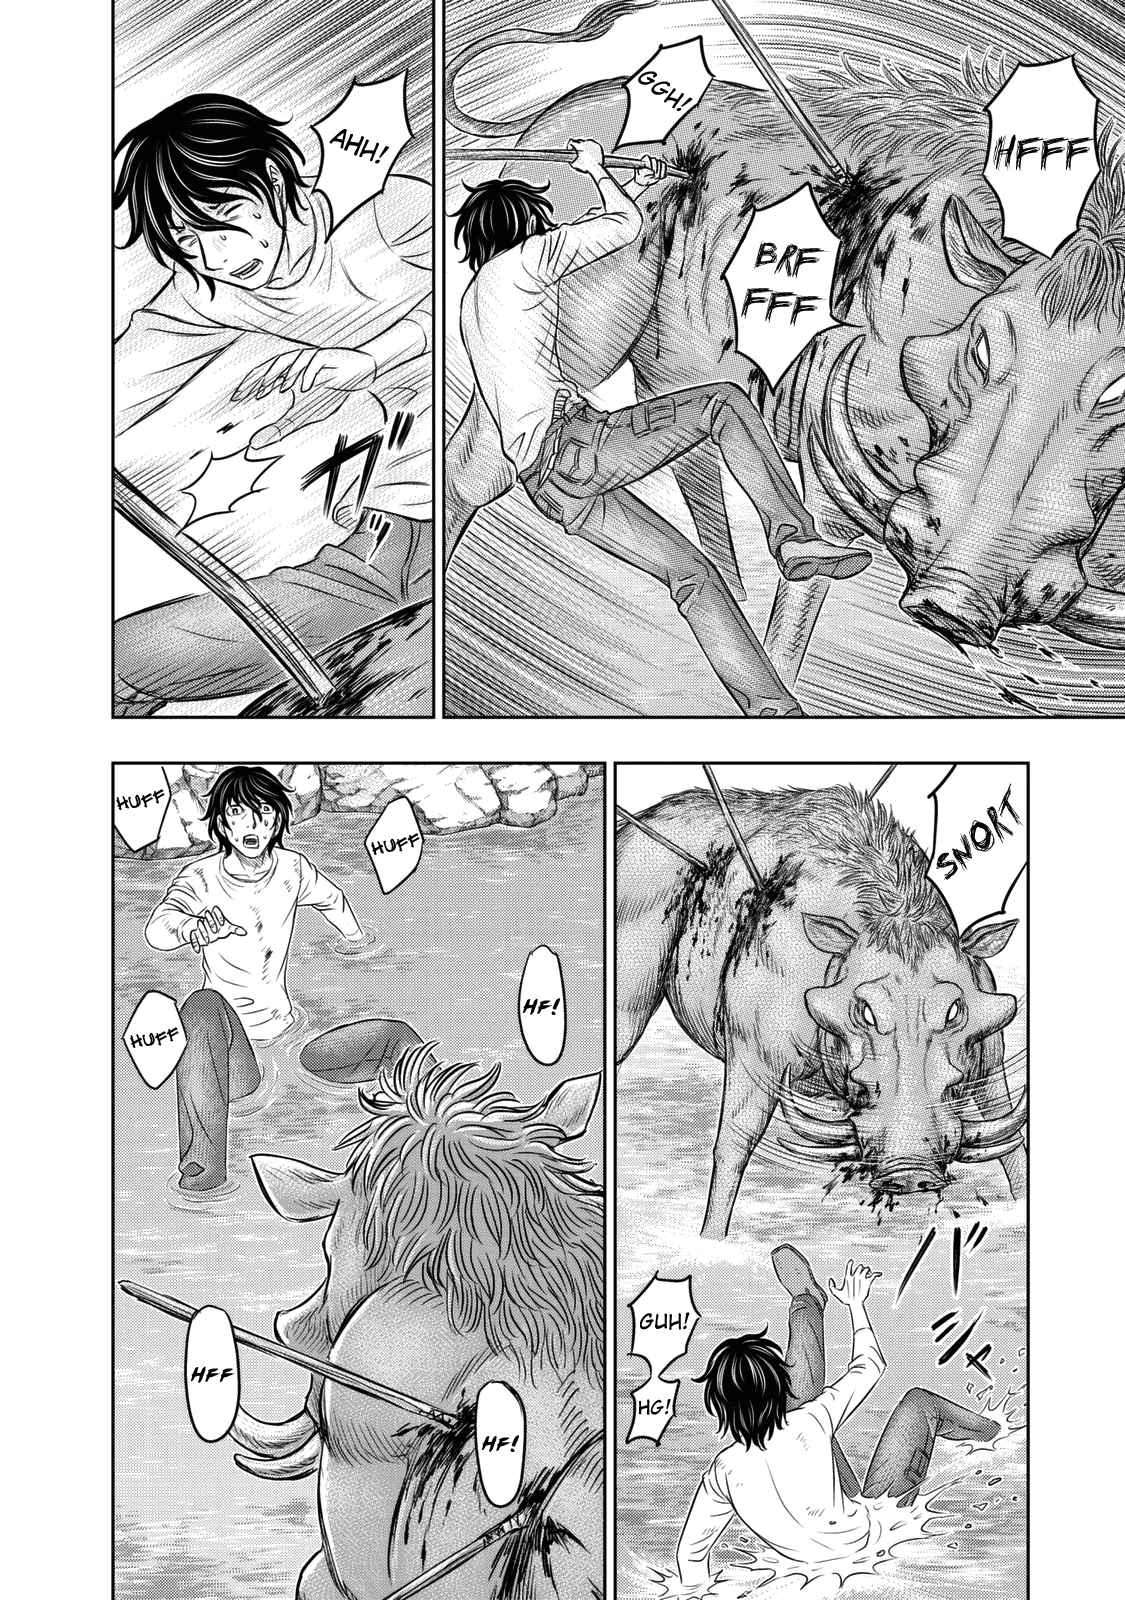 Sousei no Taiga Vol. 2 Ch. 10 Era of Giant Beasts